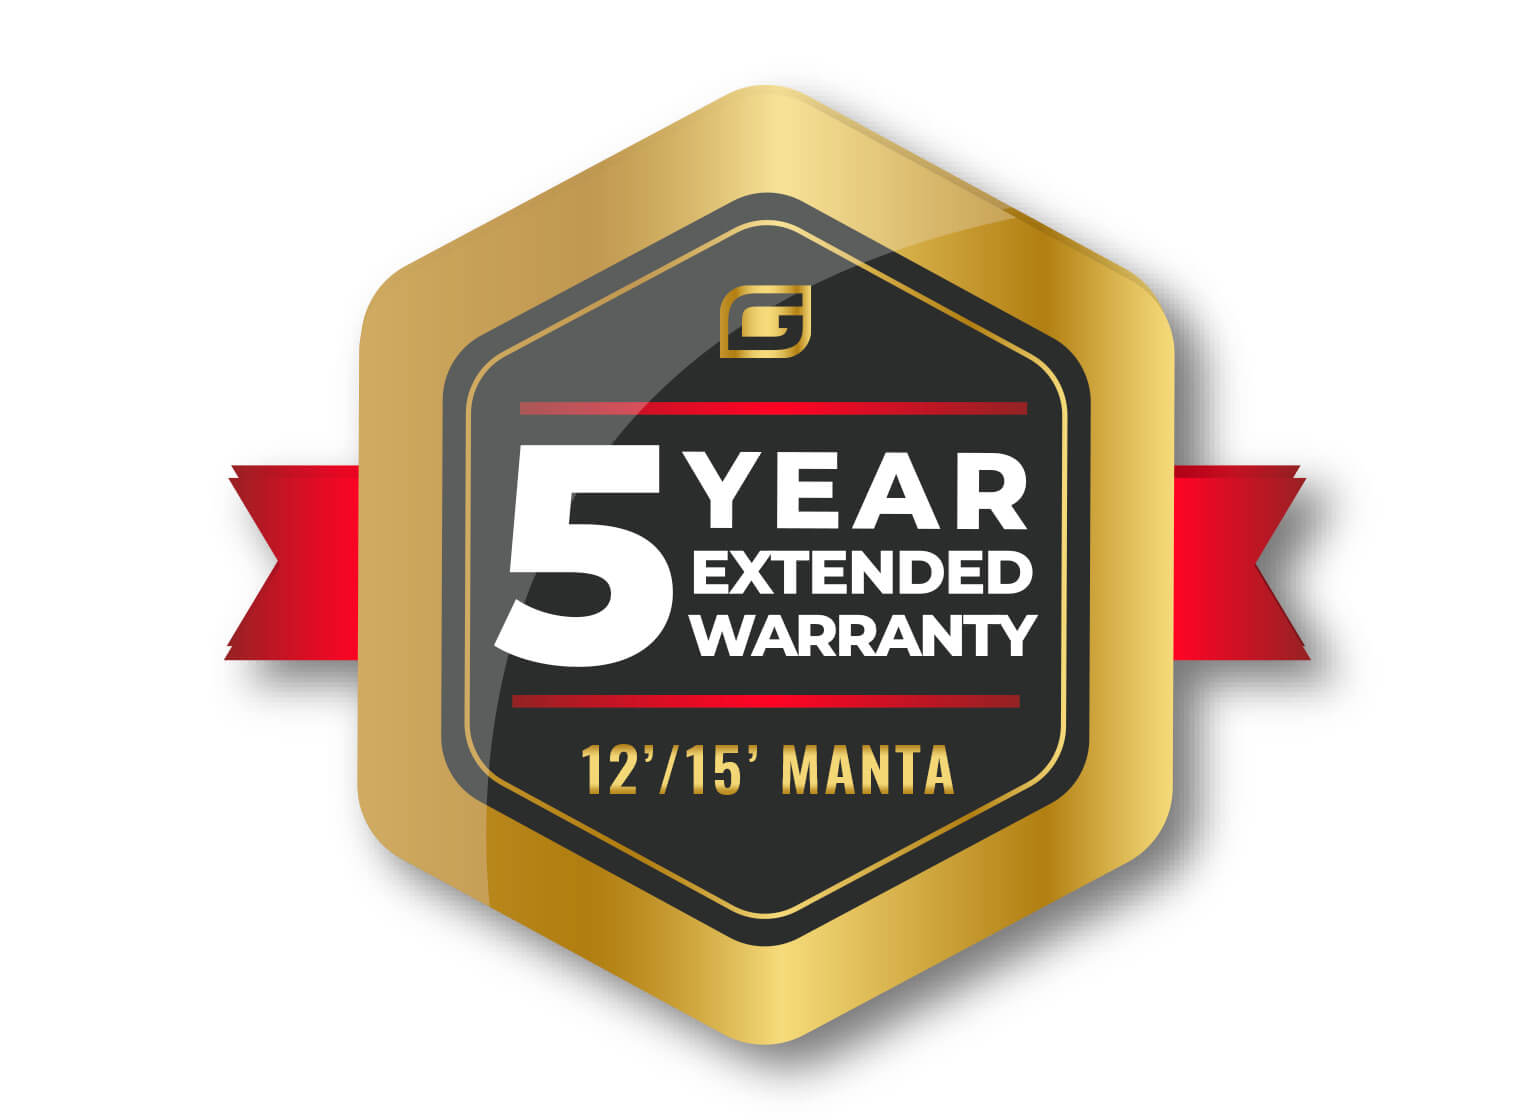 12'/15' Manta 5 Year Extended Warranty